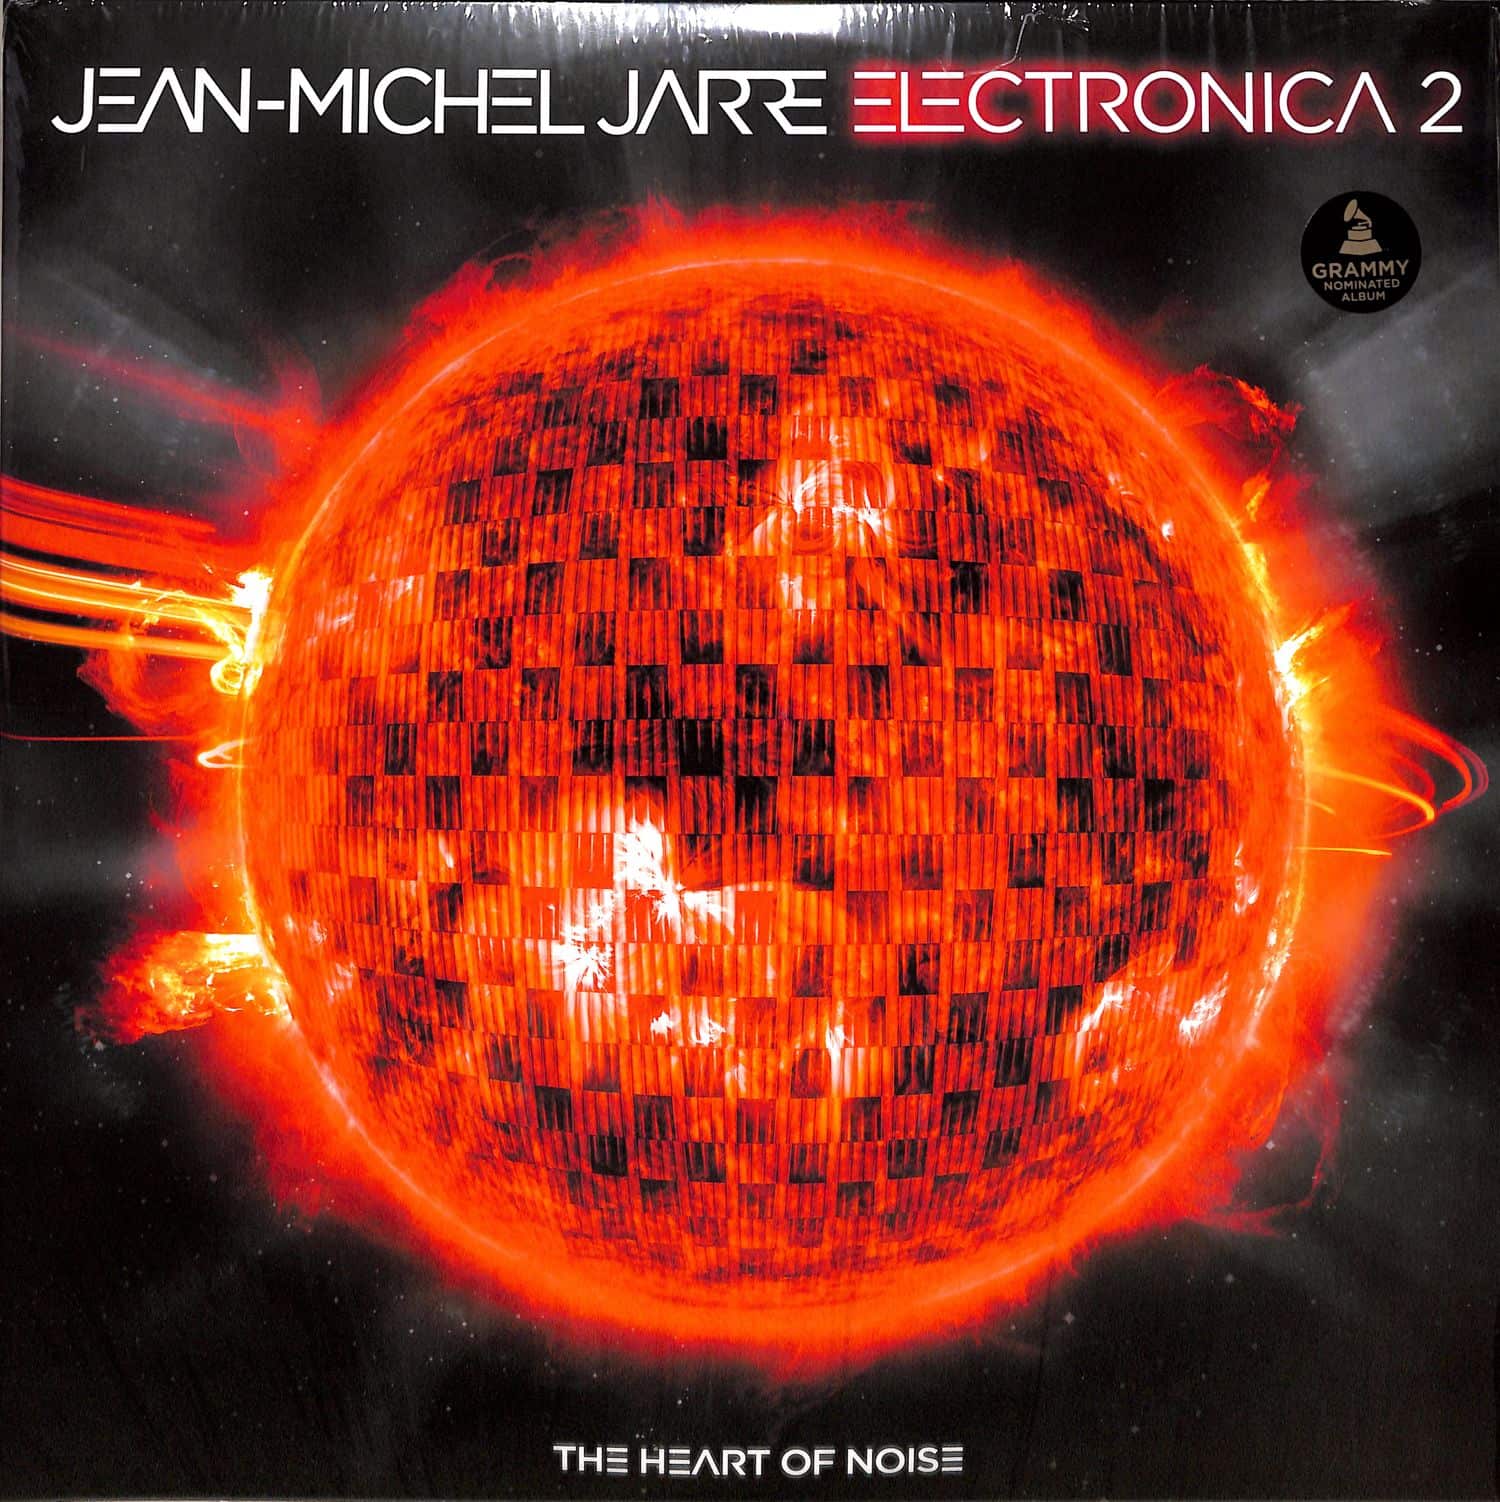 Jean-Michel Jarre - ELECTRONICA 2: THE HEART OF NOISE 